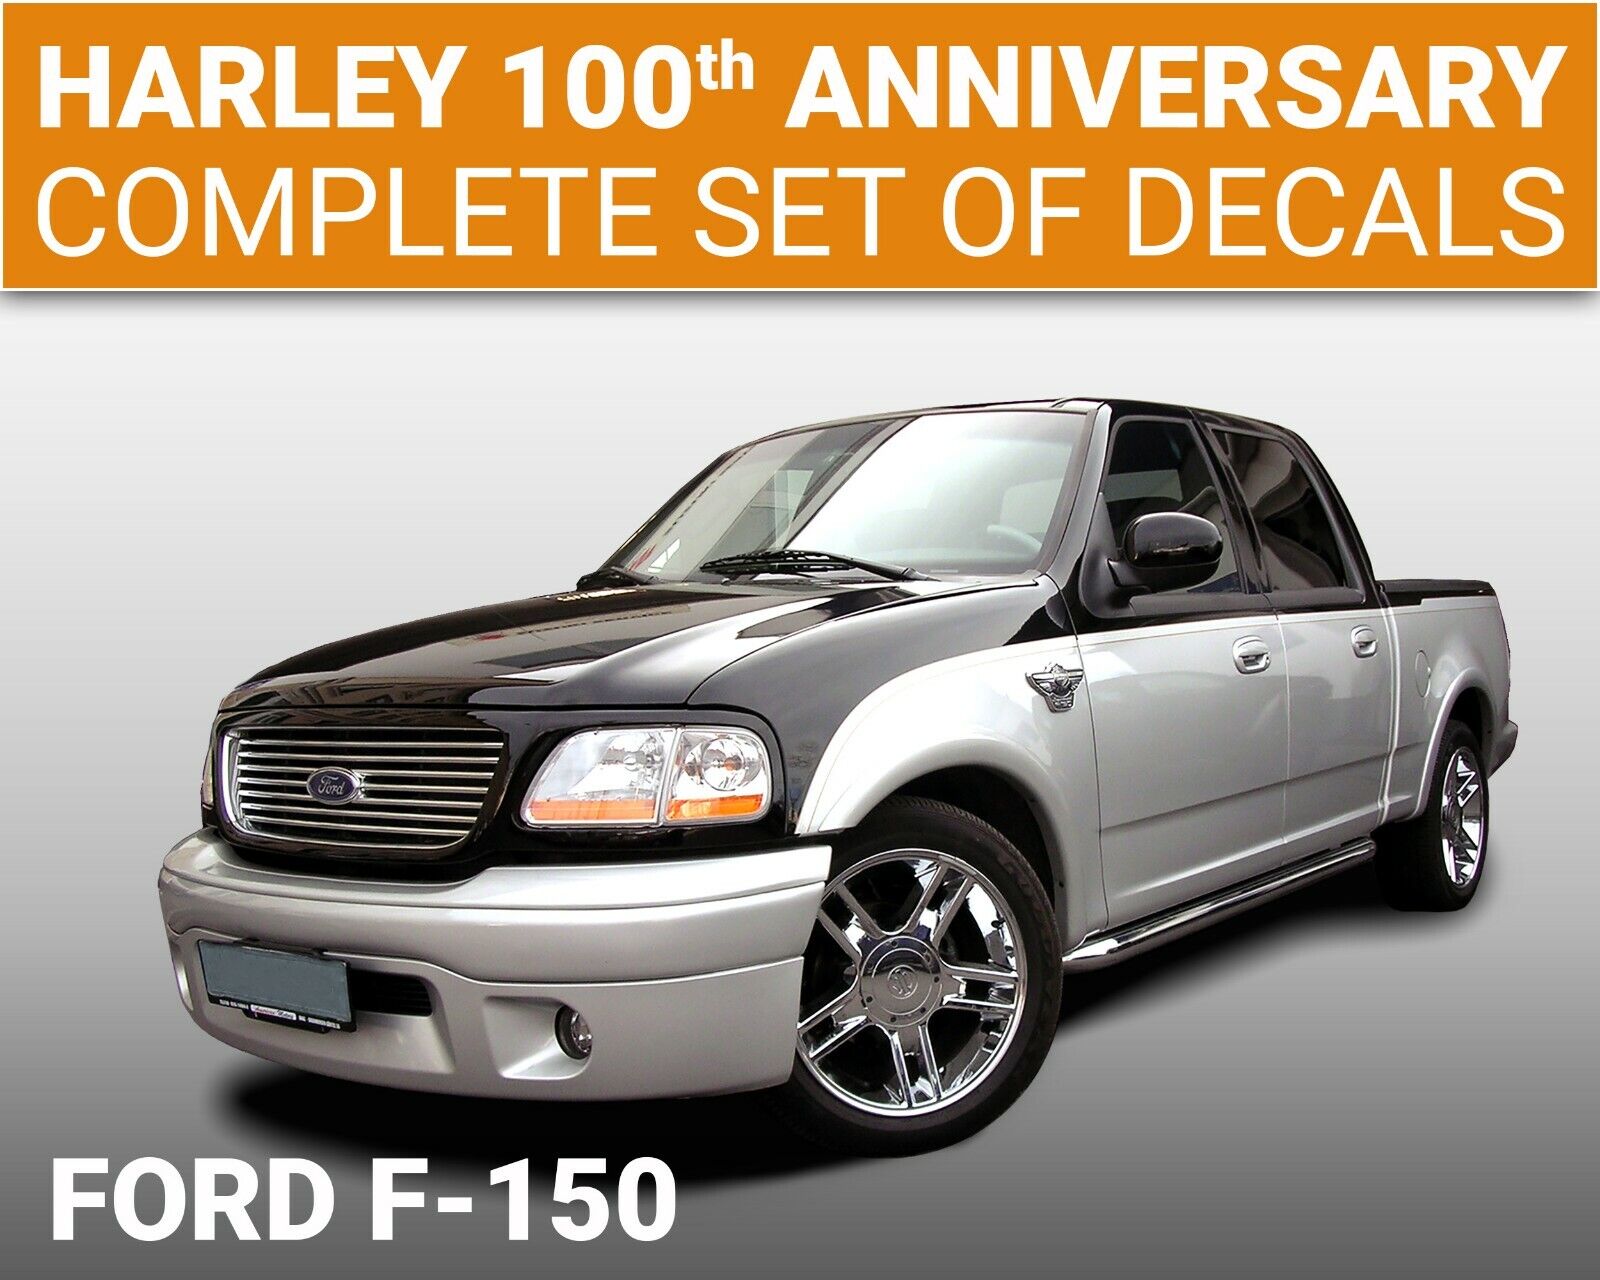 2003 Ford F-150 Harley-Davidson 100th Anniversary vinyl stripes decals # 501